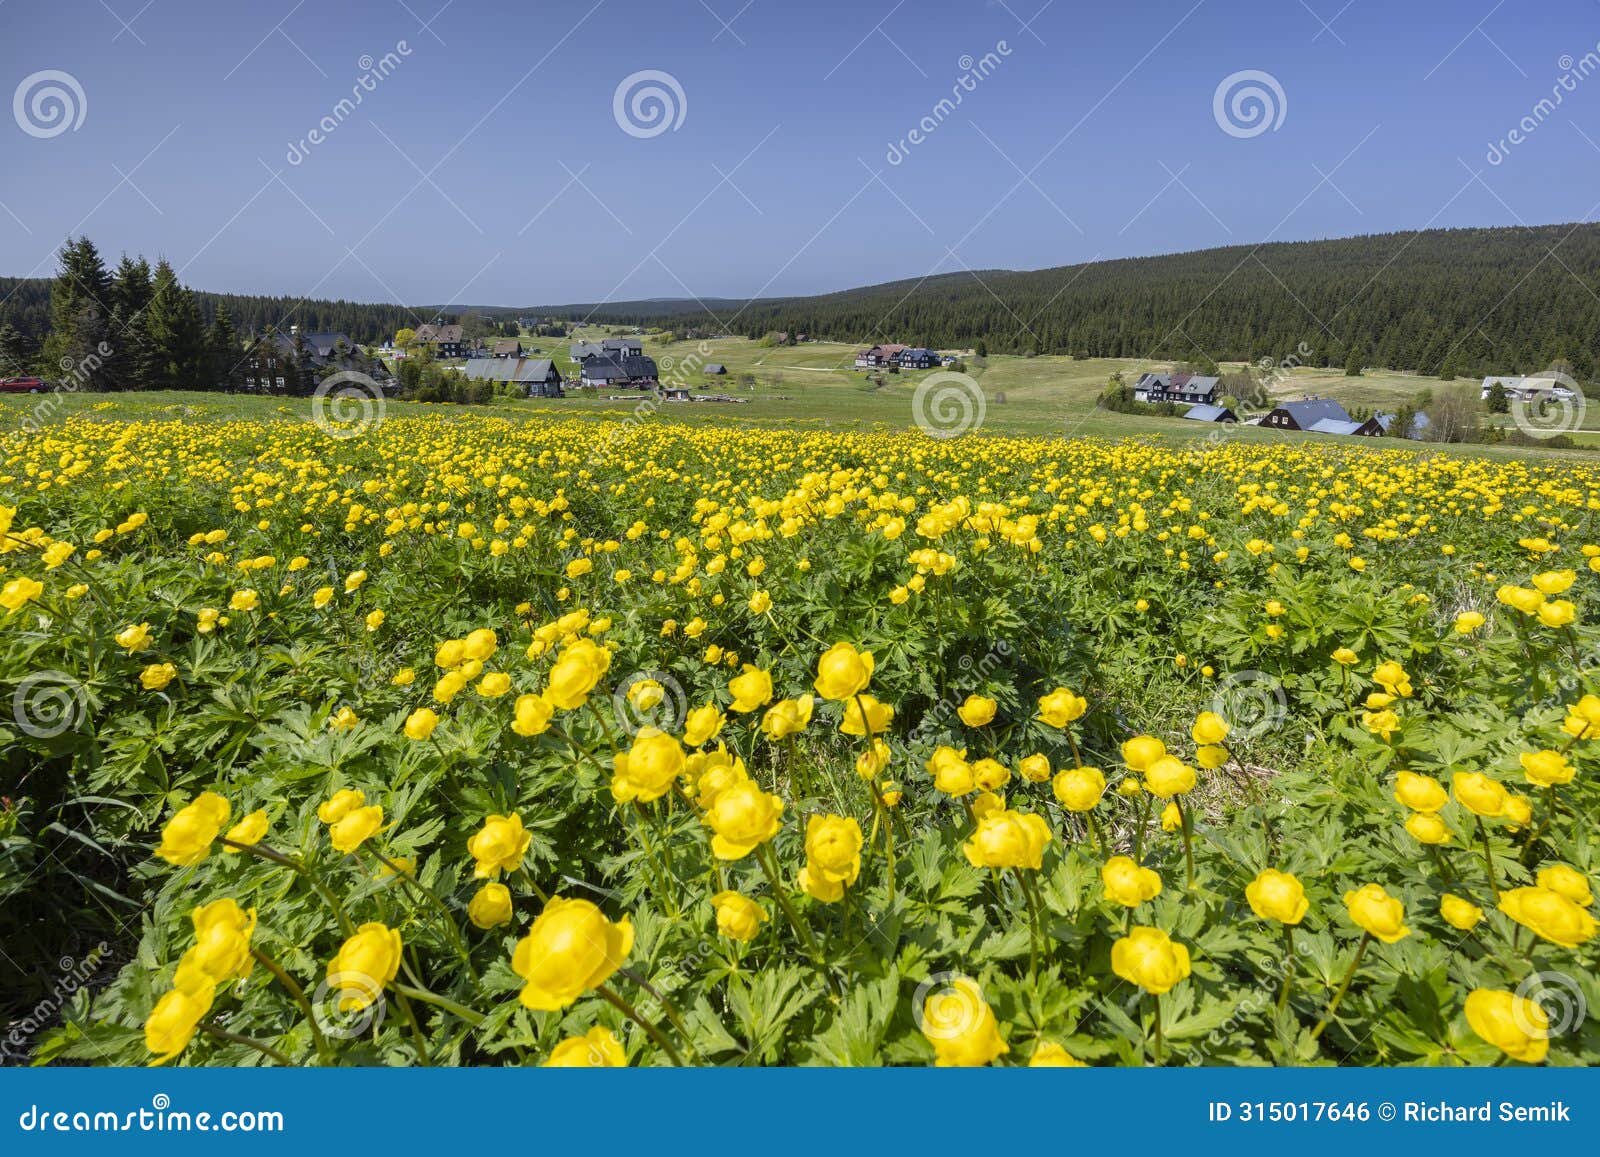 spring landscape with jizerka near korenov, northern bohemia, czech republic